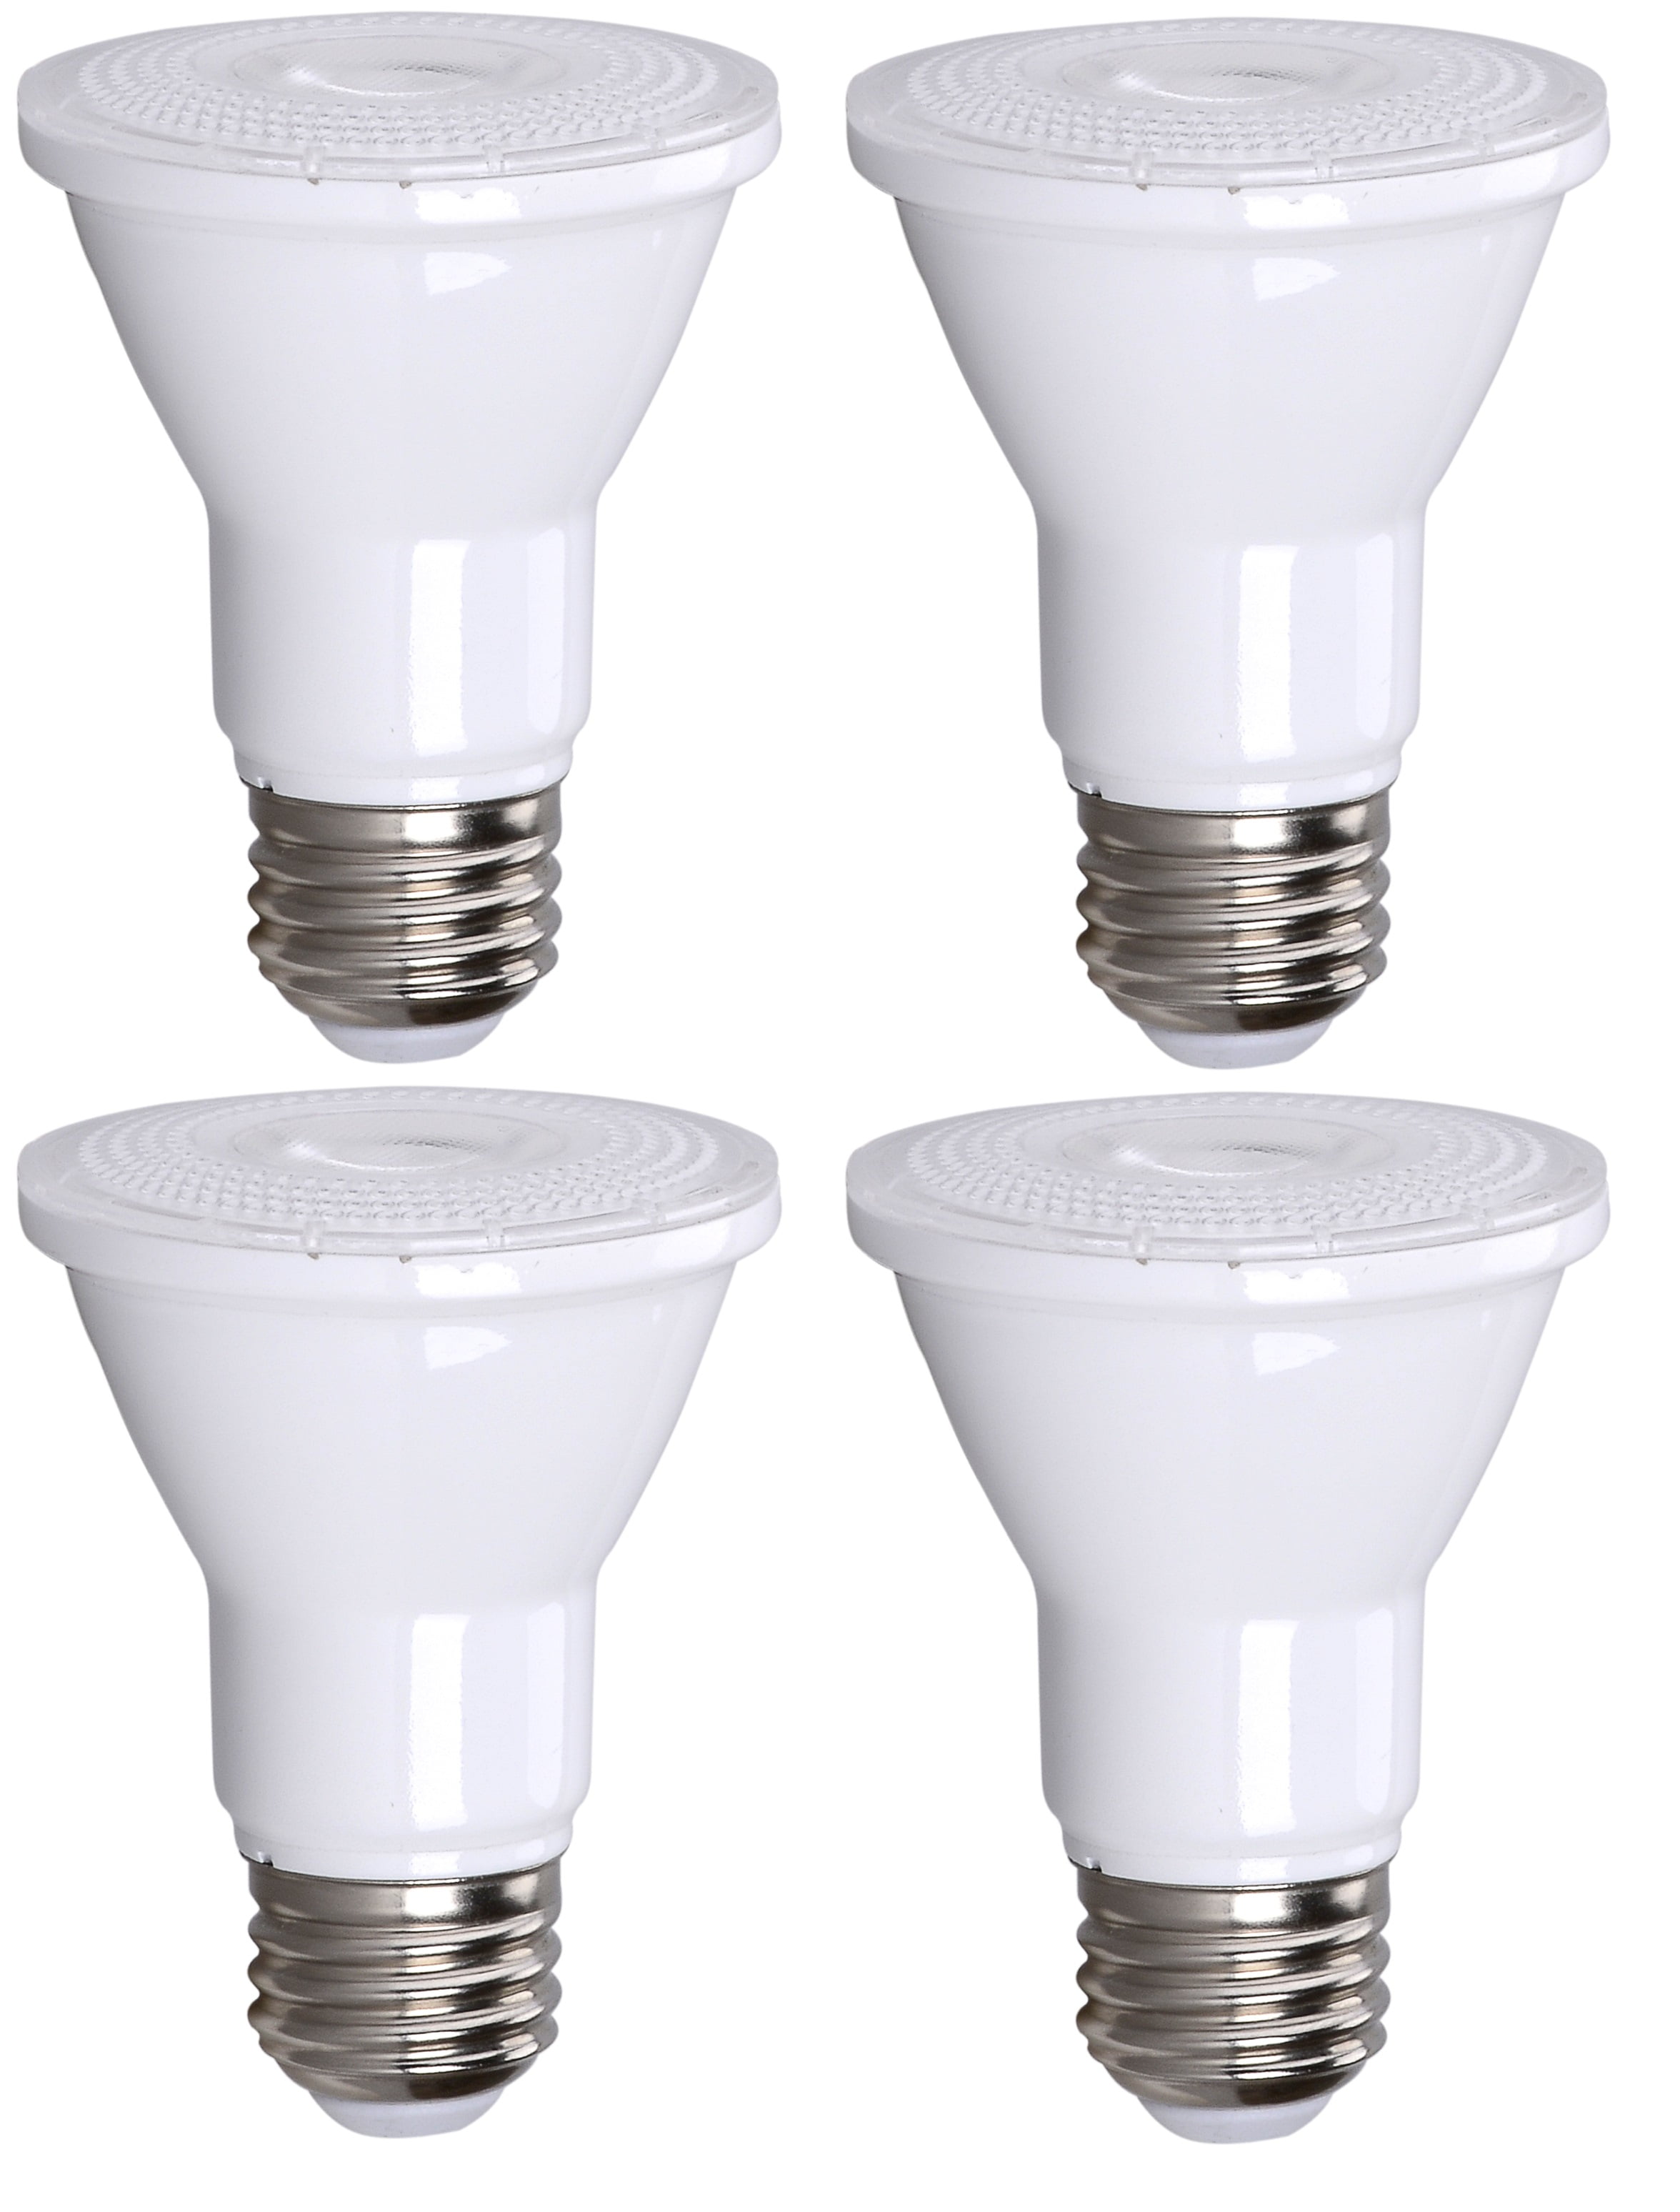 = 100W "DIMMABLE" 17W 3 Optolight LED A21 E26 Bulbs "Warm White" 1600 Lumens 